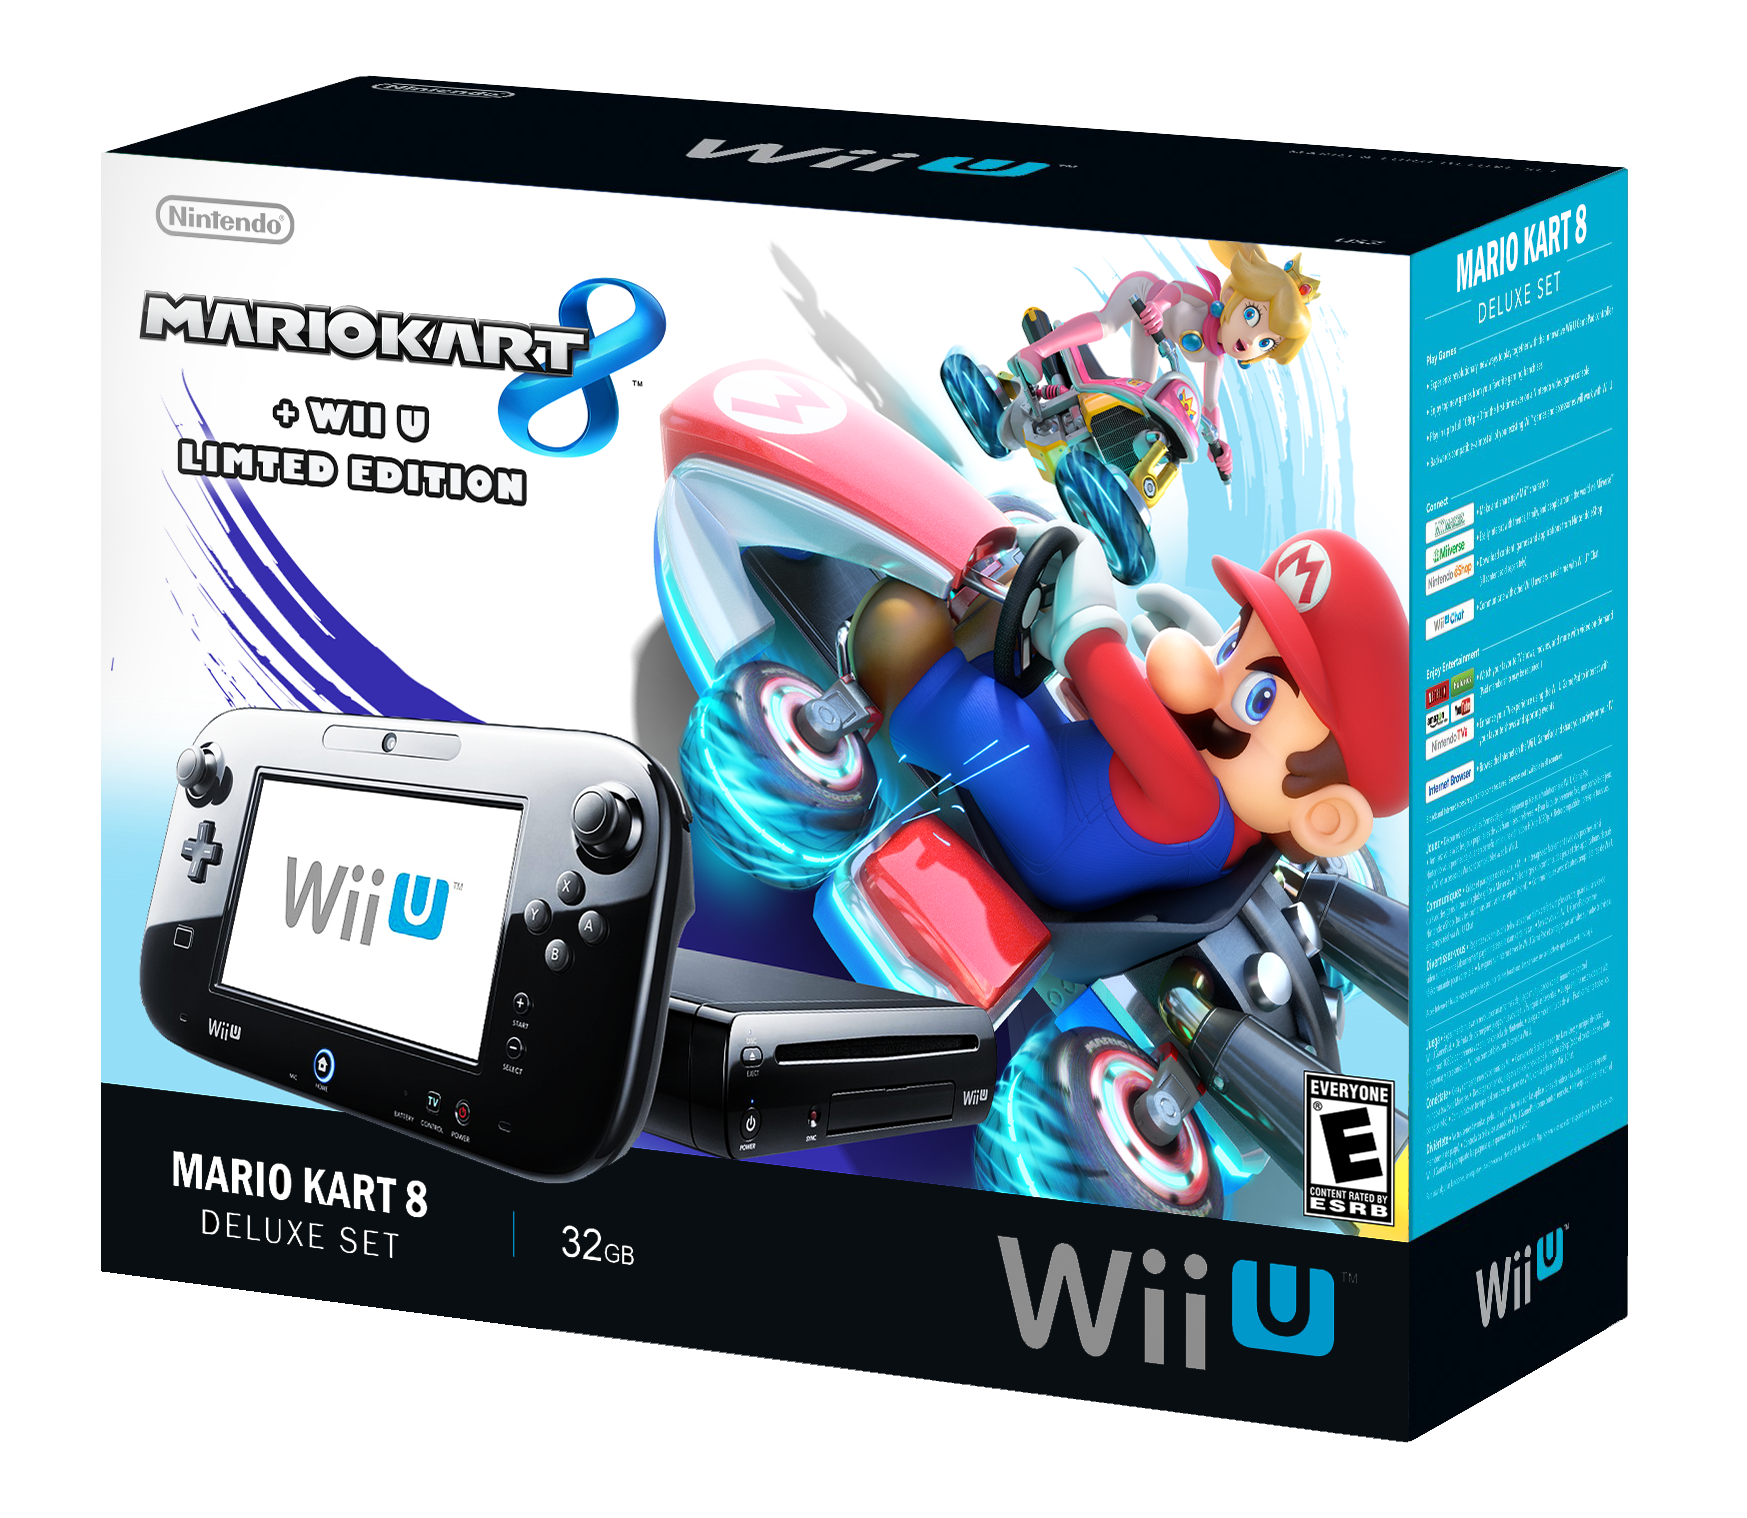 Mario Kart 8 Wii U Bundle box cover